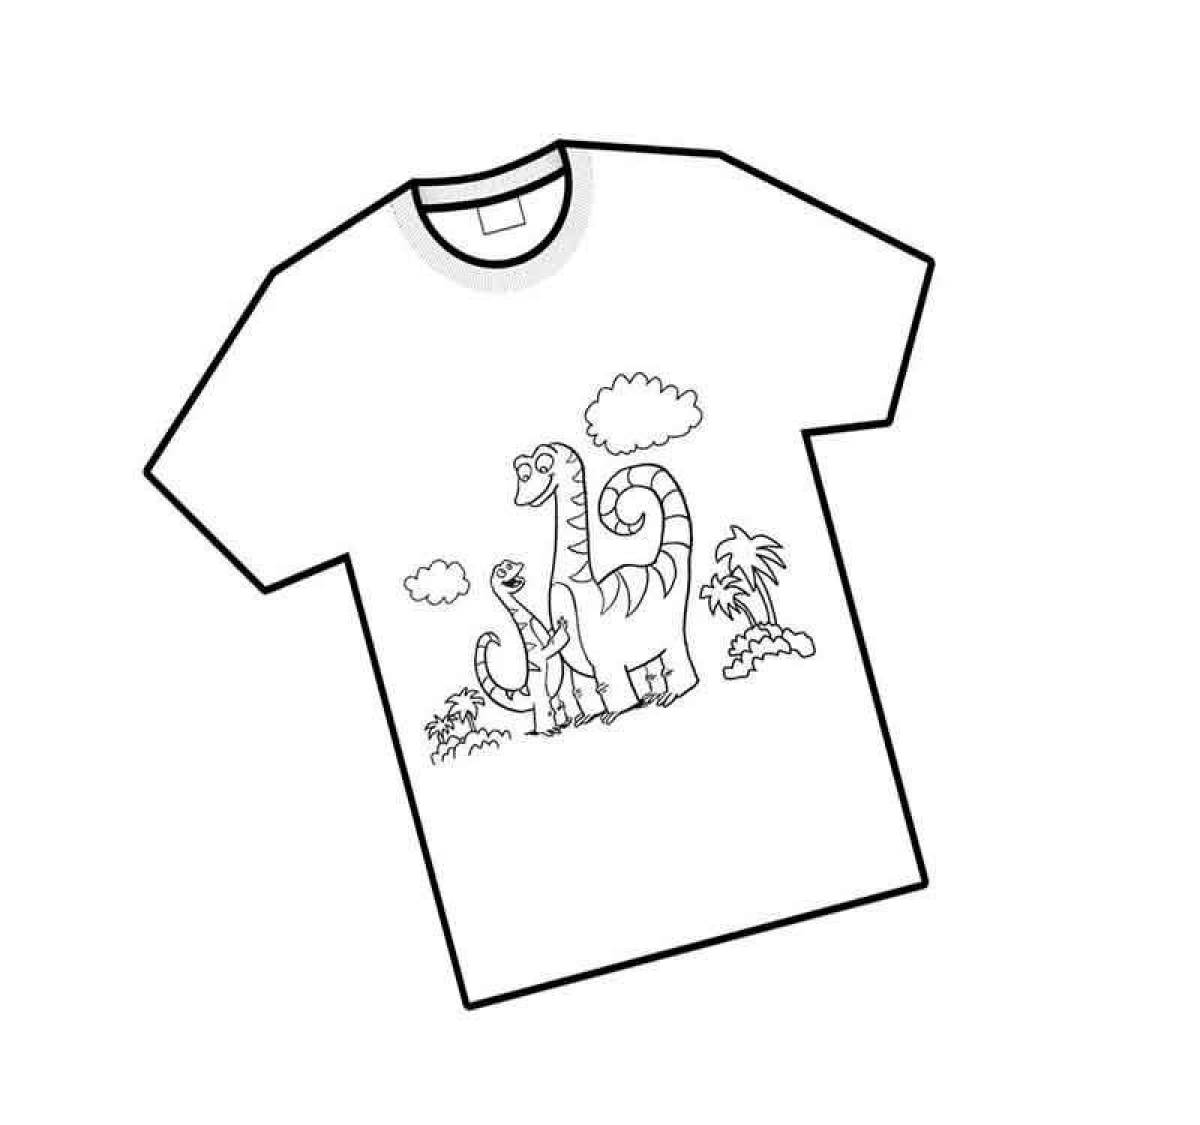 Joyful coloring t-shirt for kids